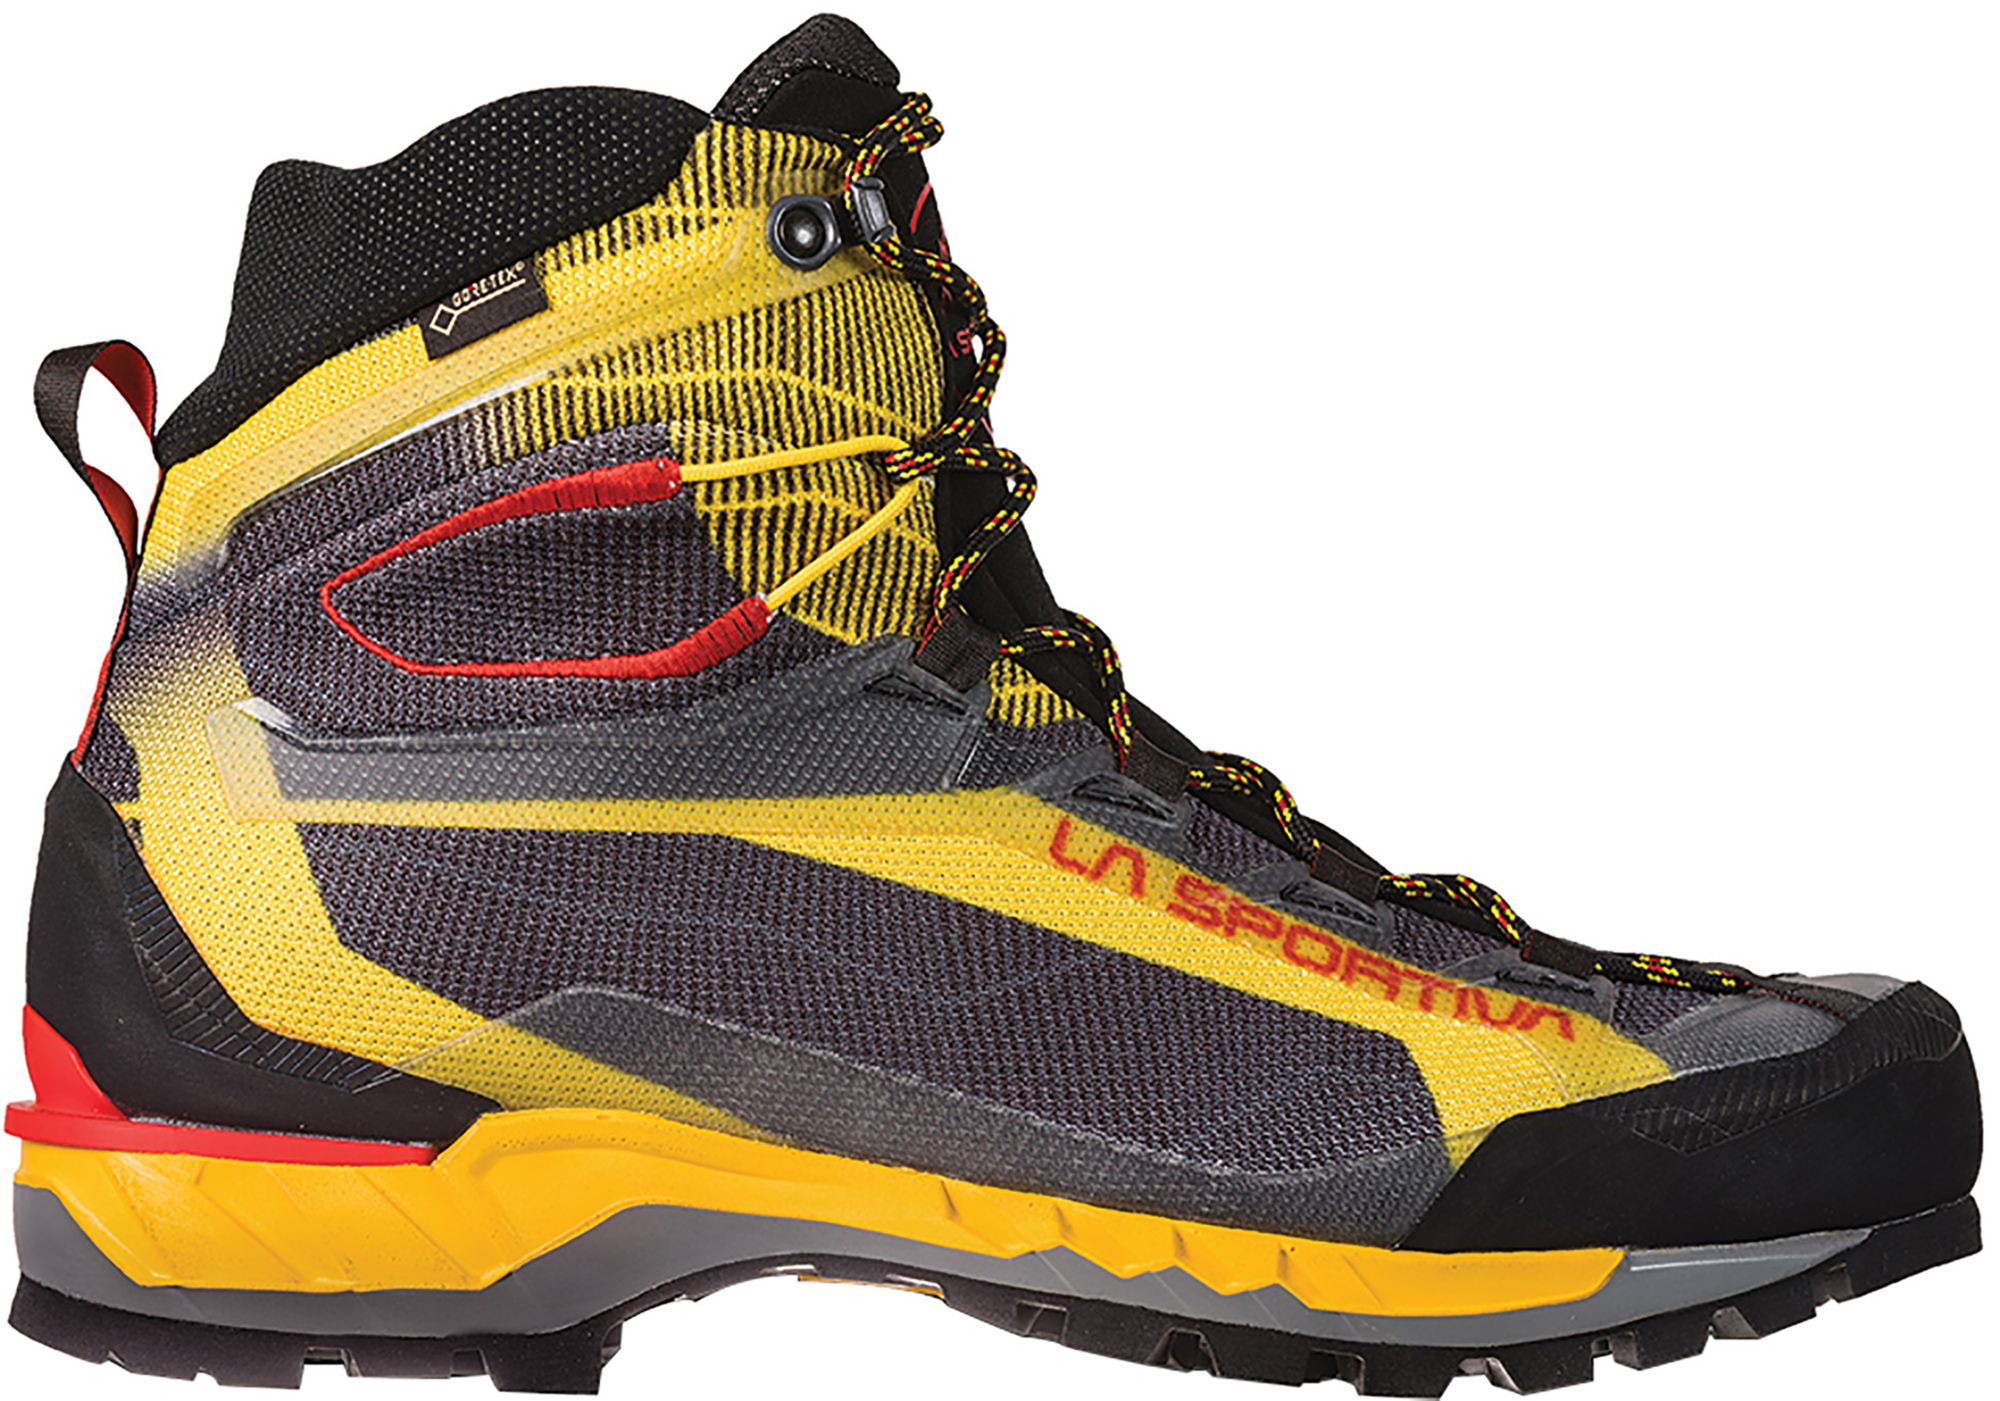 Photos - Trekking Shoes La Sportiva Men's Trango Tech GTX Hiking Boots, Size 44, Black/Yellow 21QP 